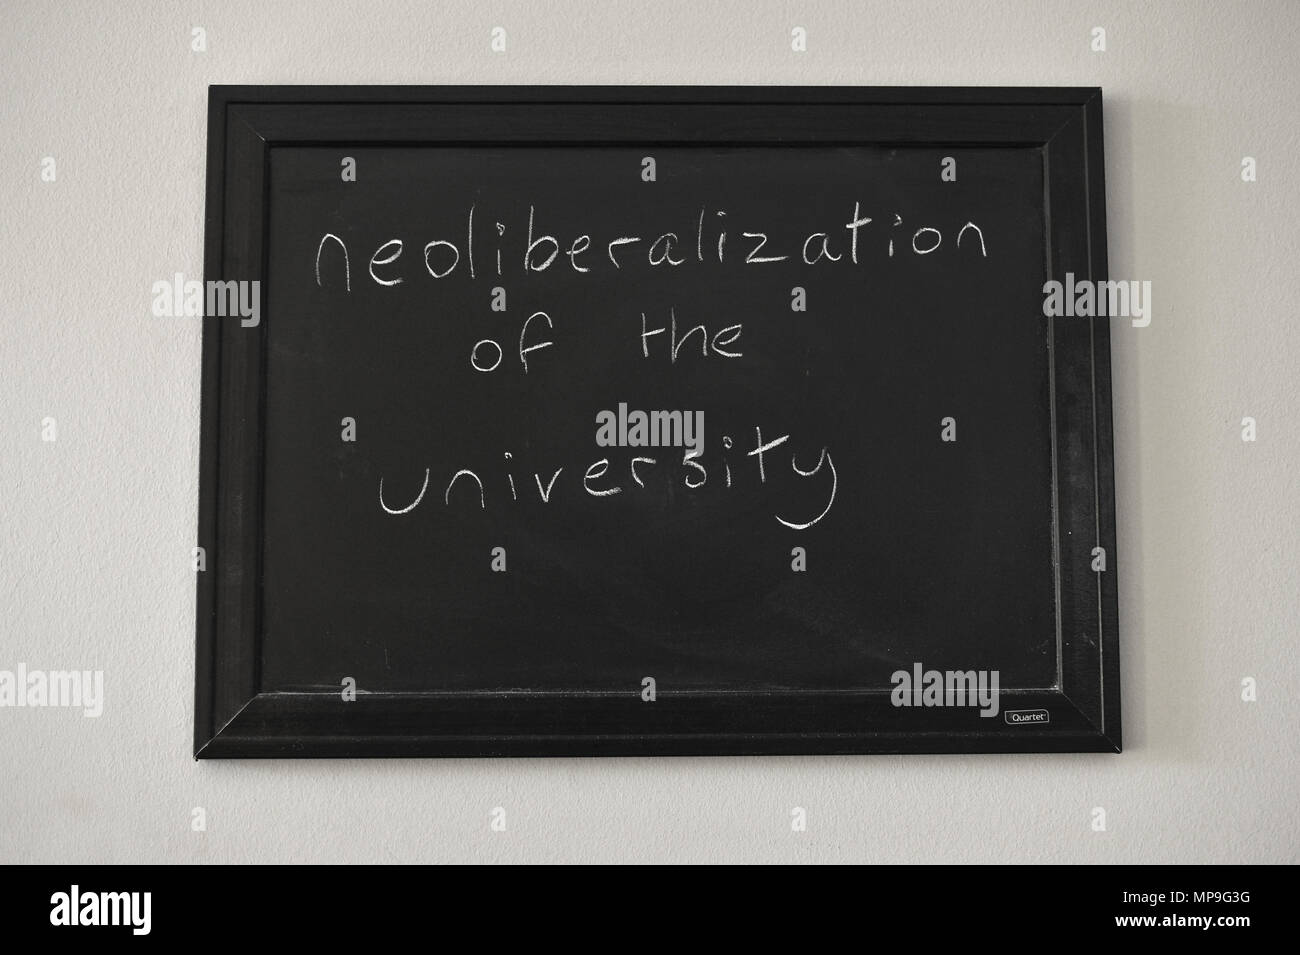 Neoliberalization of the university written in white chalk on a wall mounted blackboard. Stock Photo